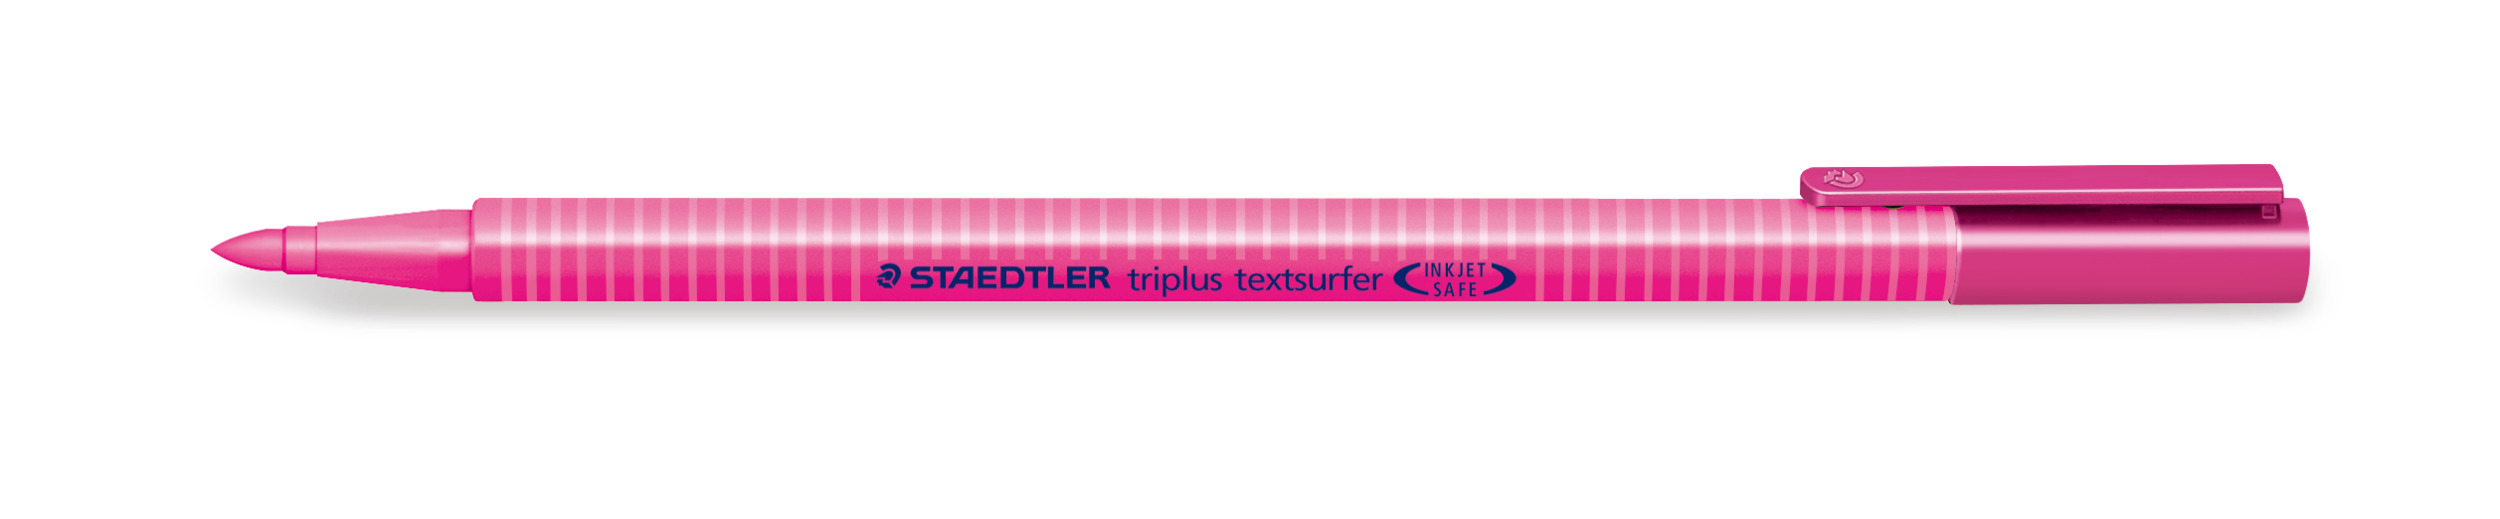 Triplus Textsurfer 362 Markeerstift 1 - 4 mm Roze